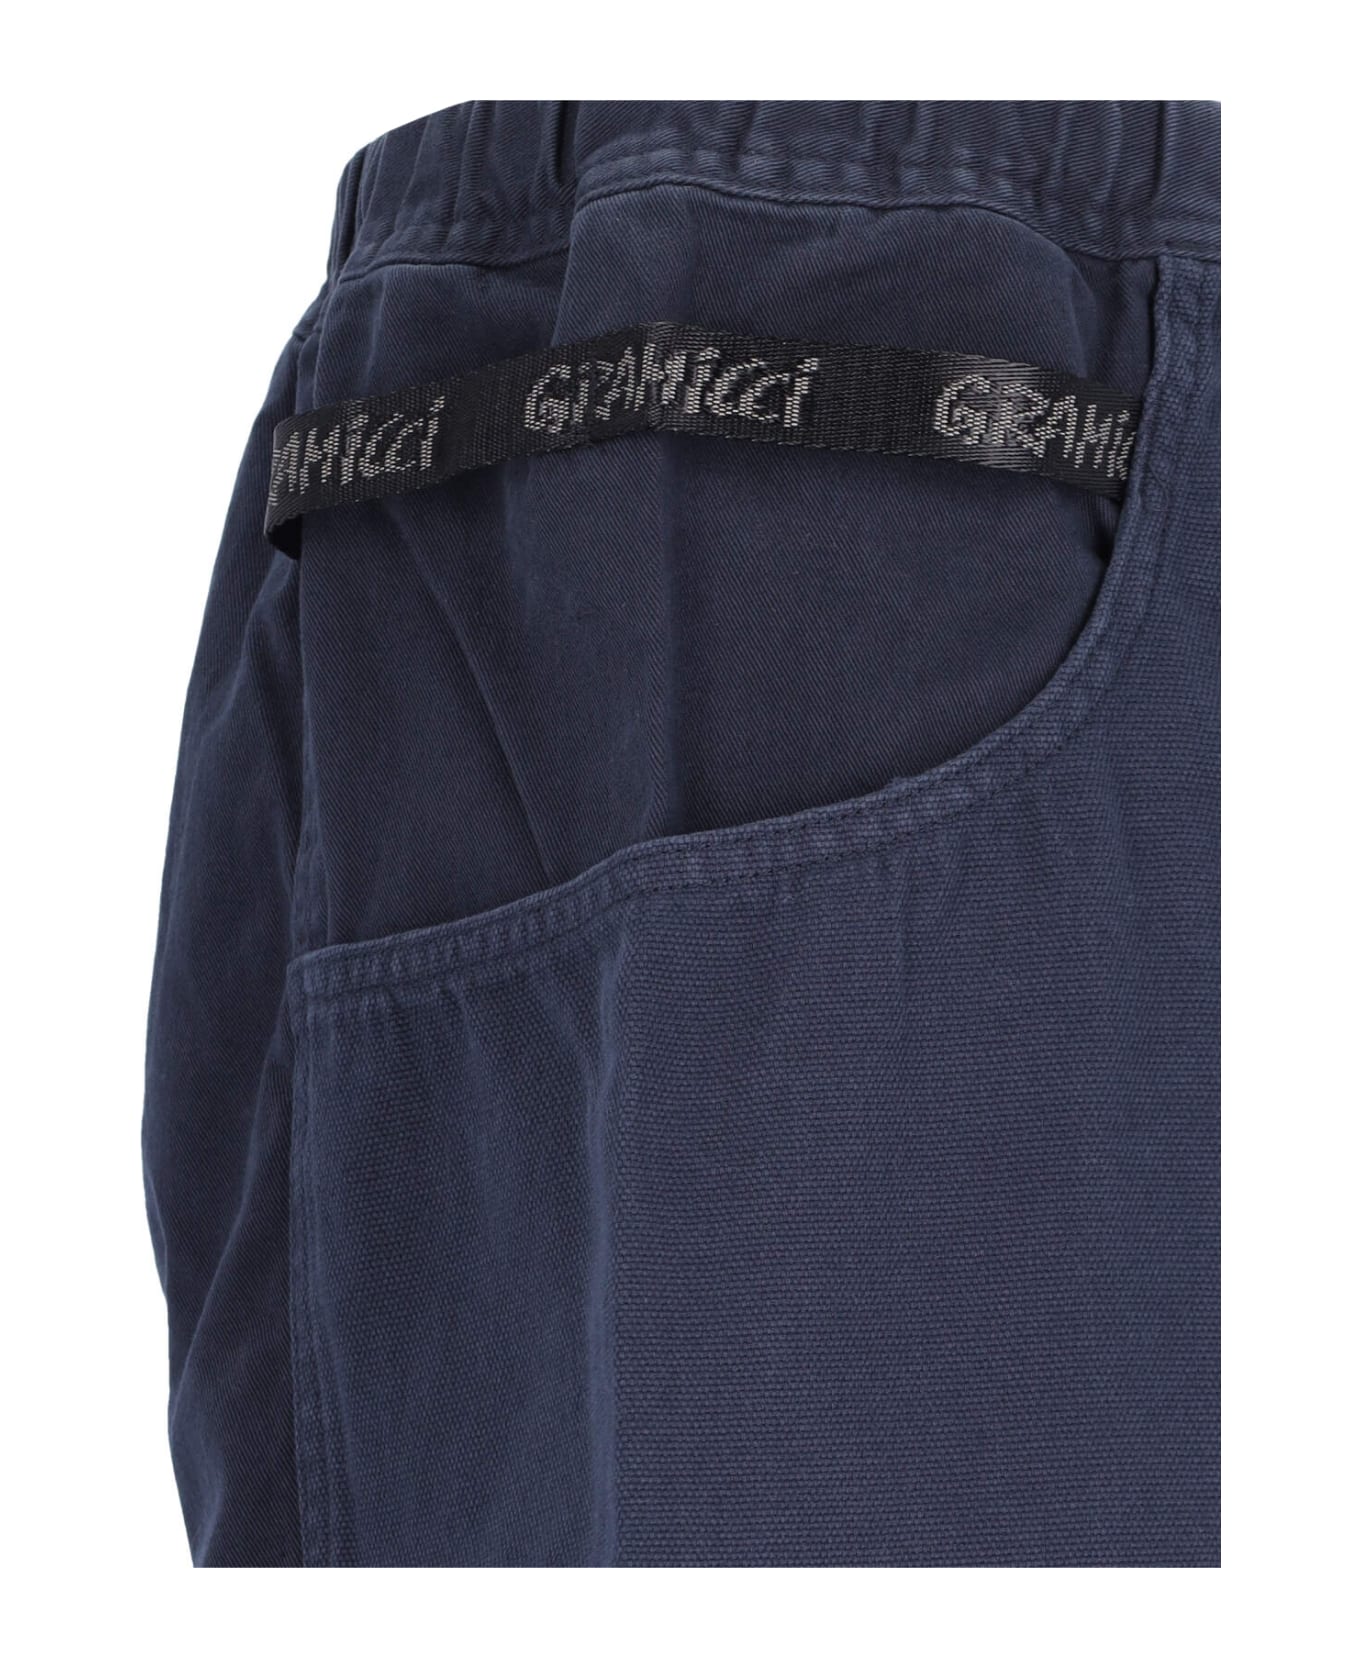 Gramicci 'gadget' Shorts - Blue ショートパンツ